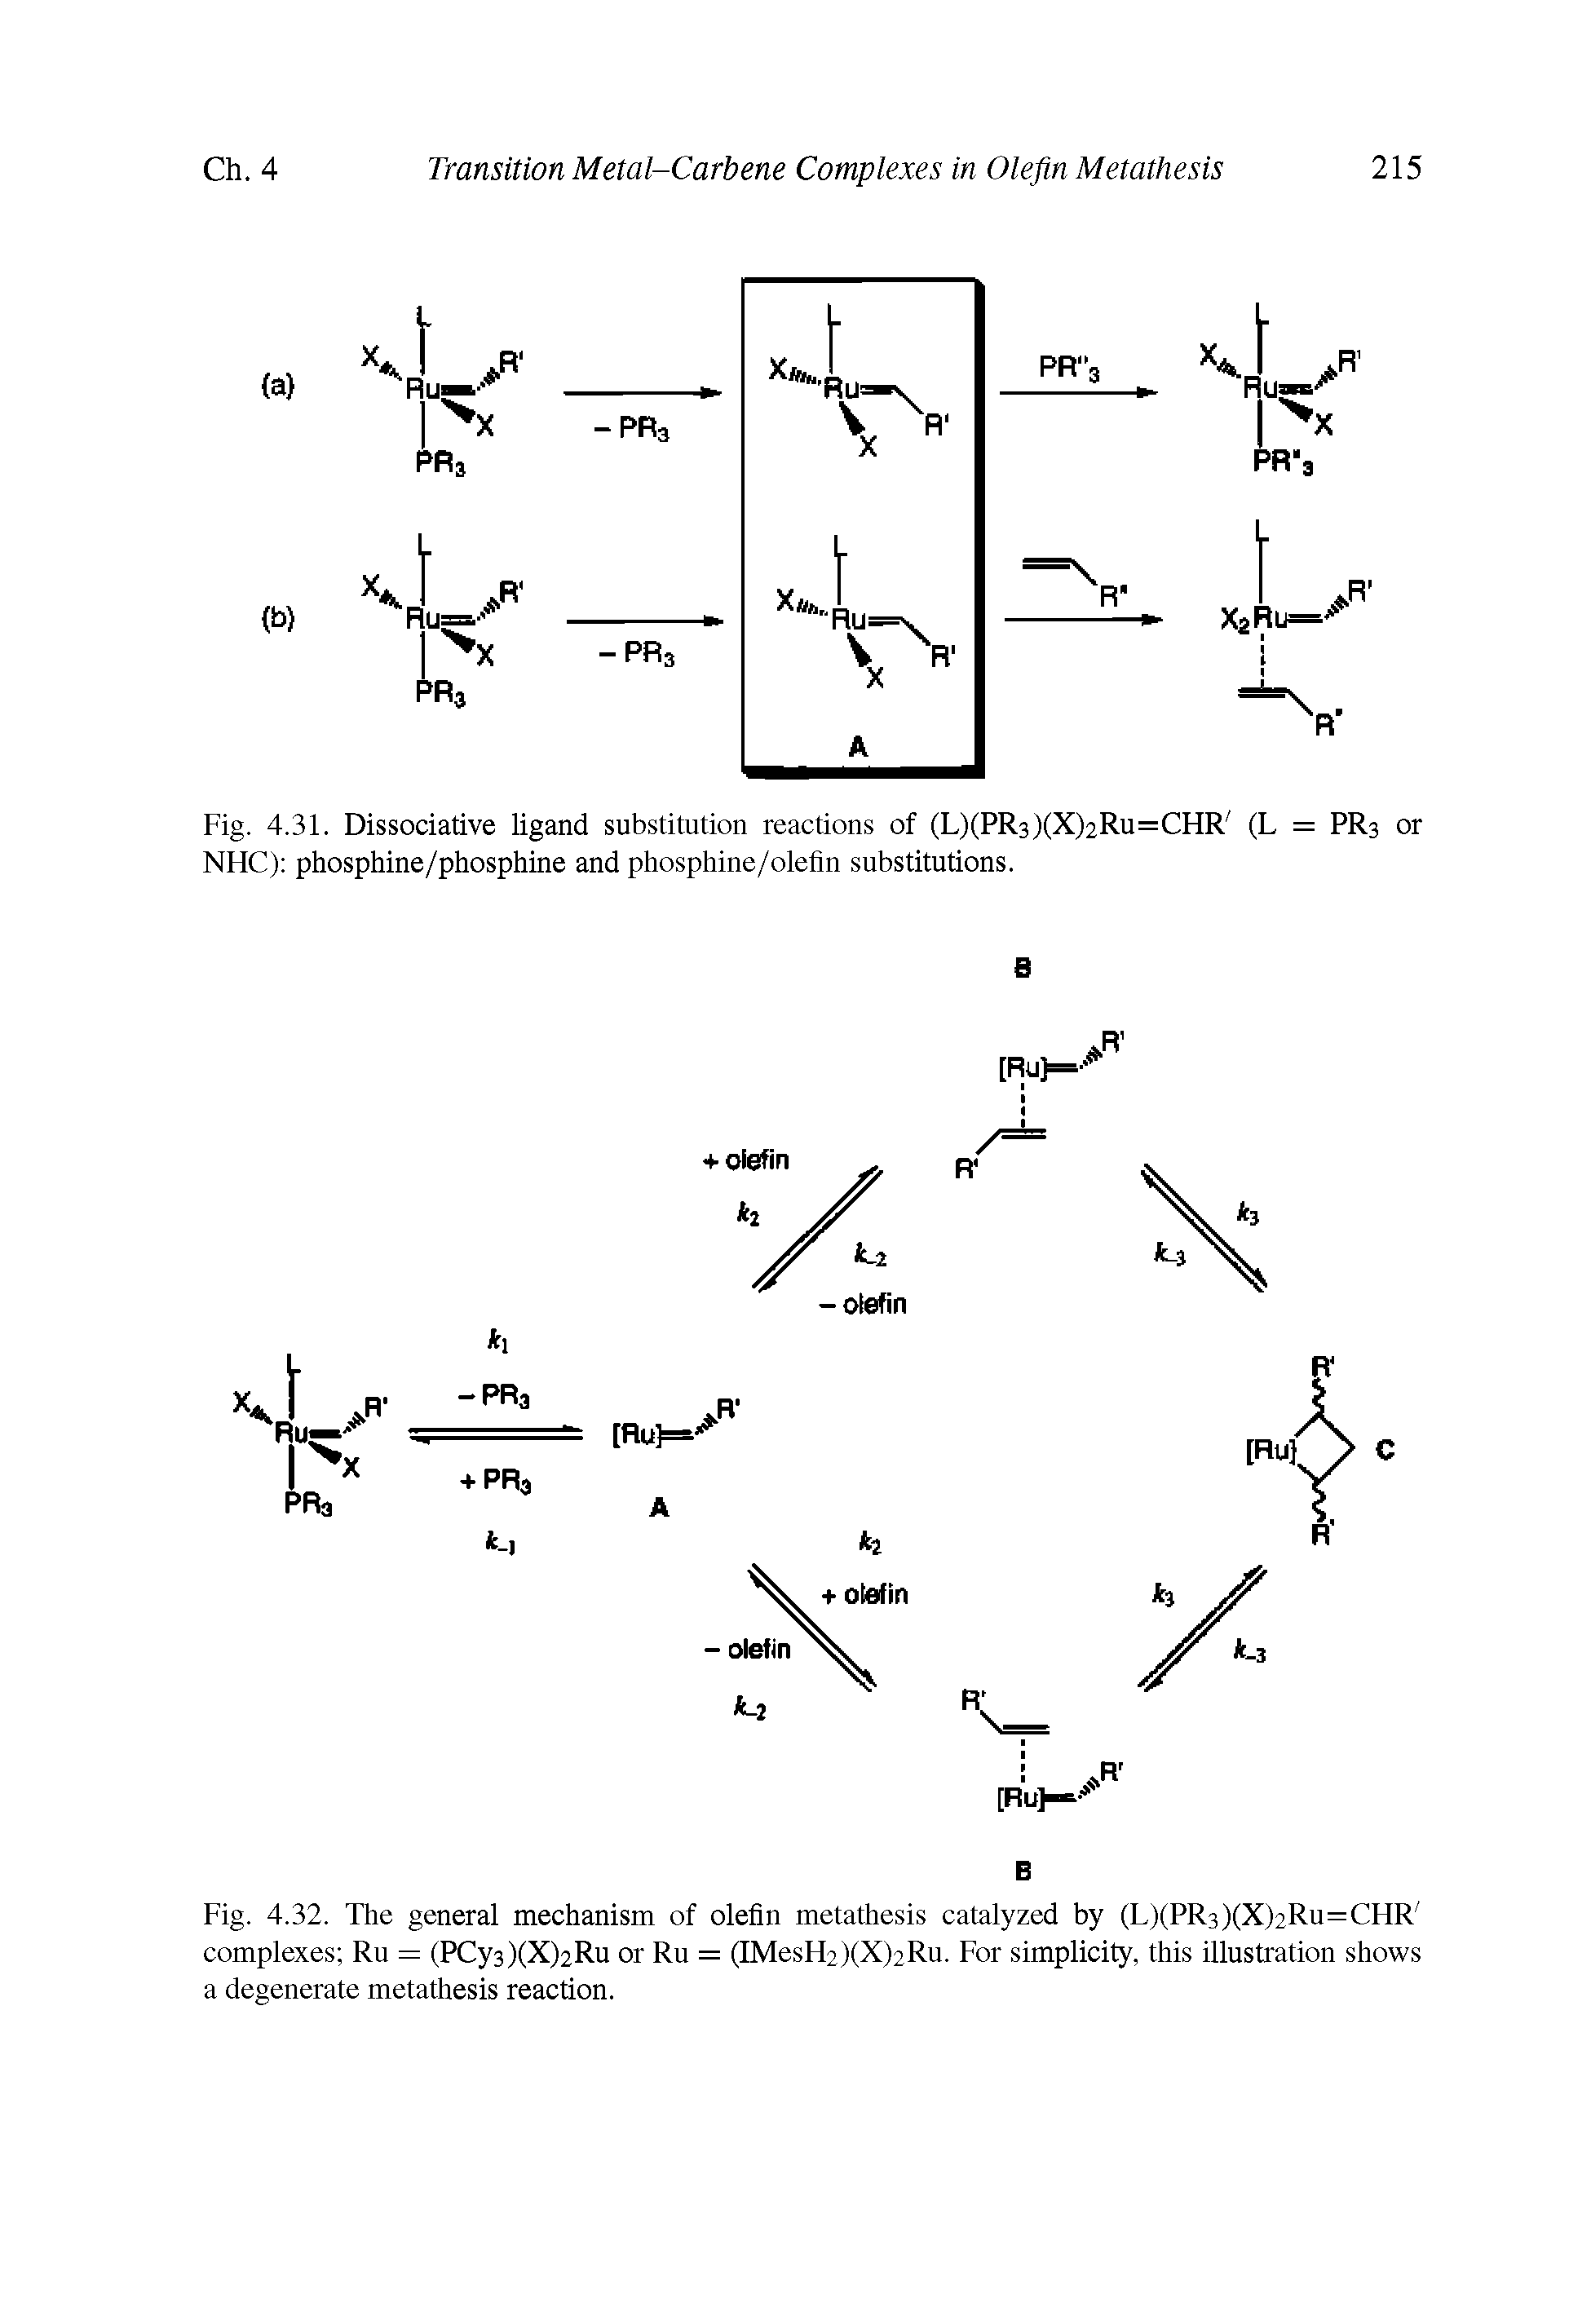 Fig. 4.31. Dissociative ligand substitution reactions of (L)(PR3)(X)2Ru=CHR (L = PR3 or NHC) phosphine/phosphine and phosphine/olefin substitutions.